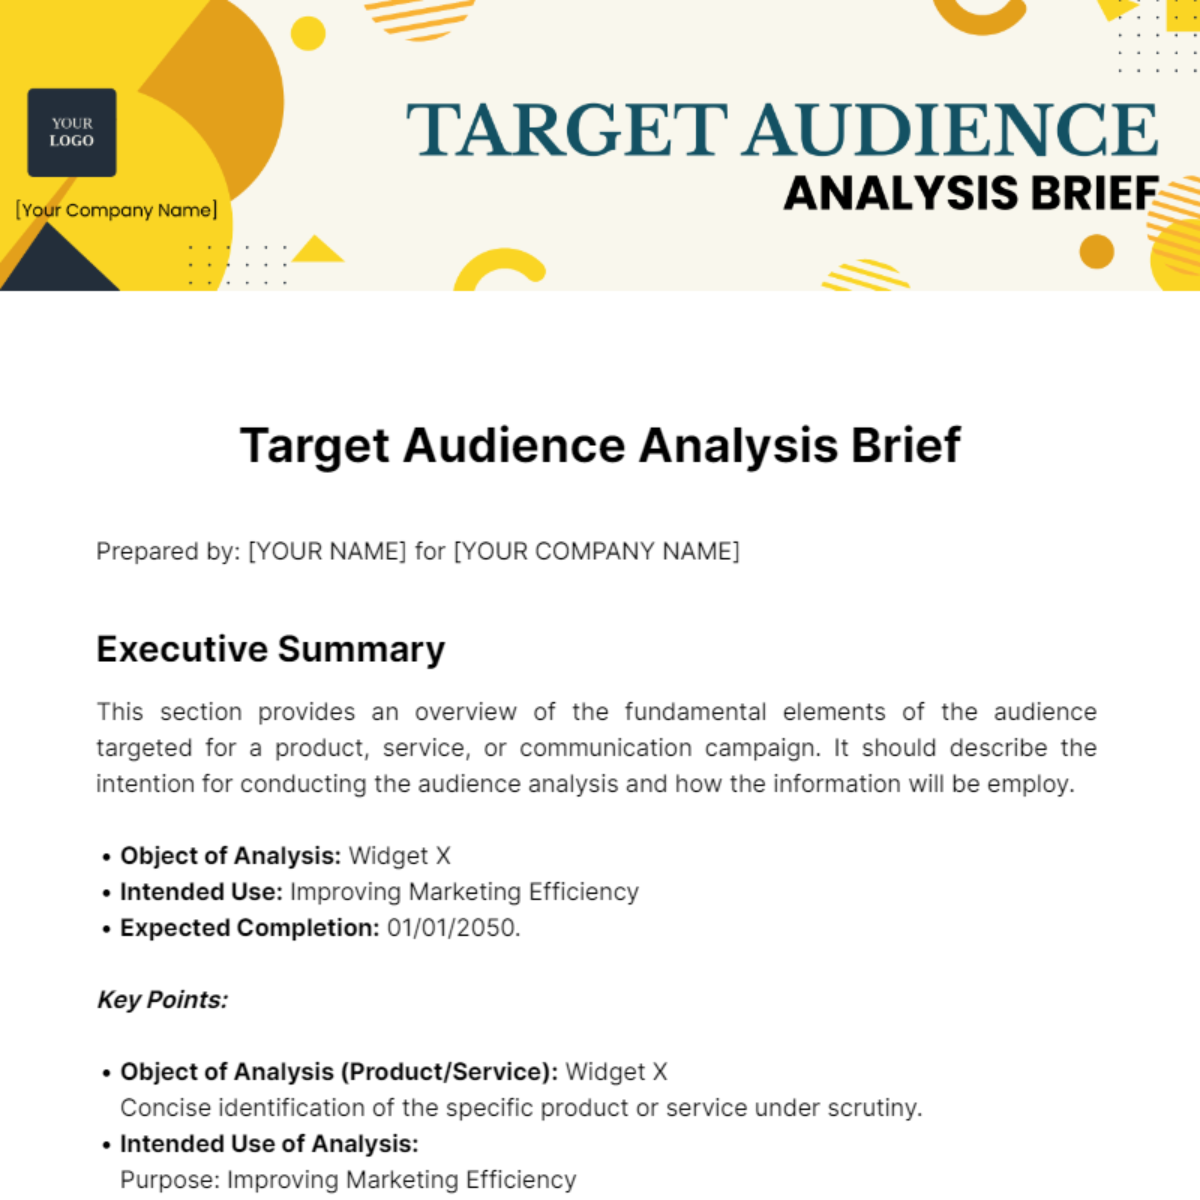 Target Audience Analysis Brief Template